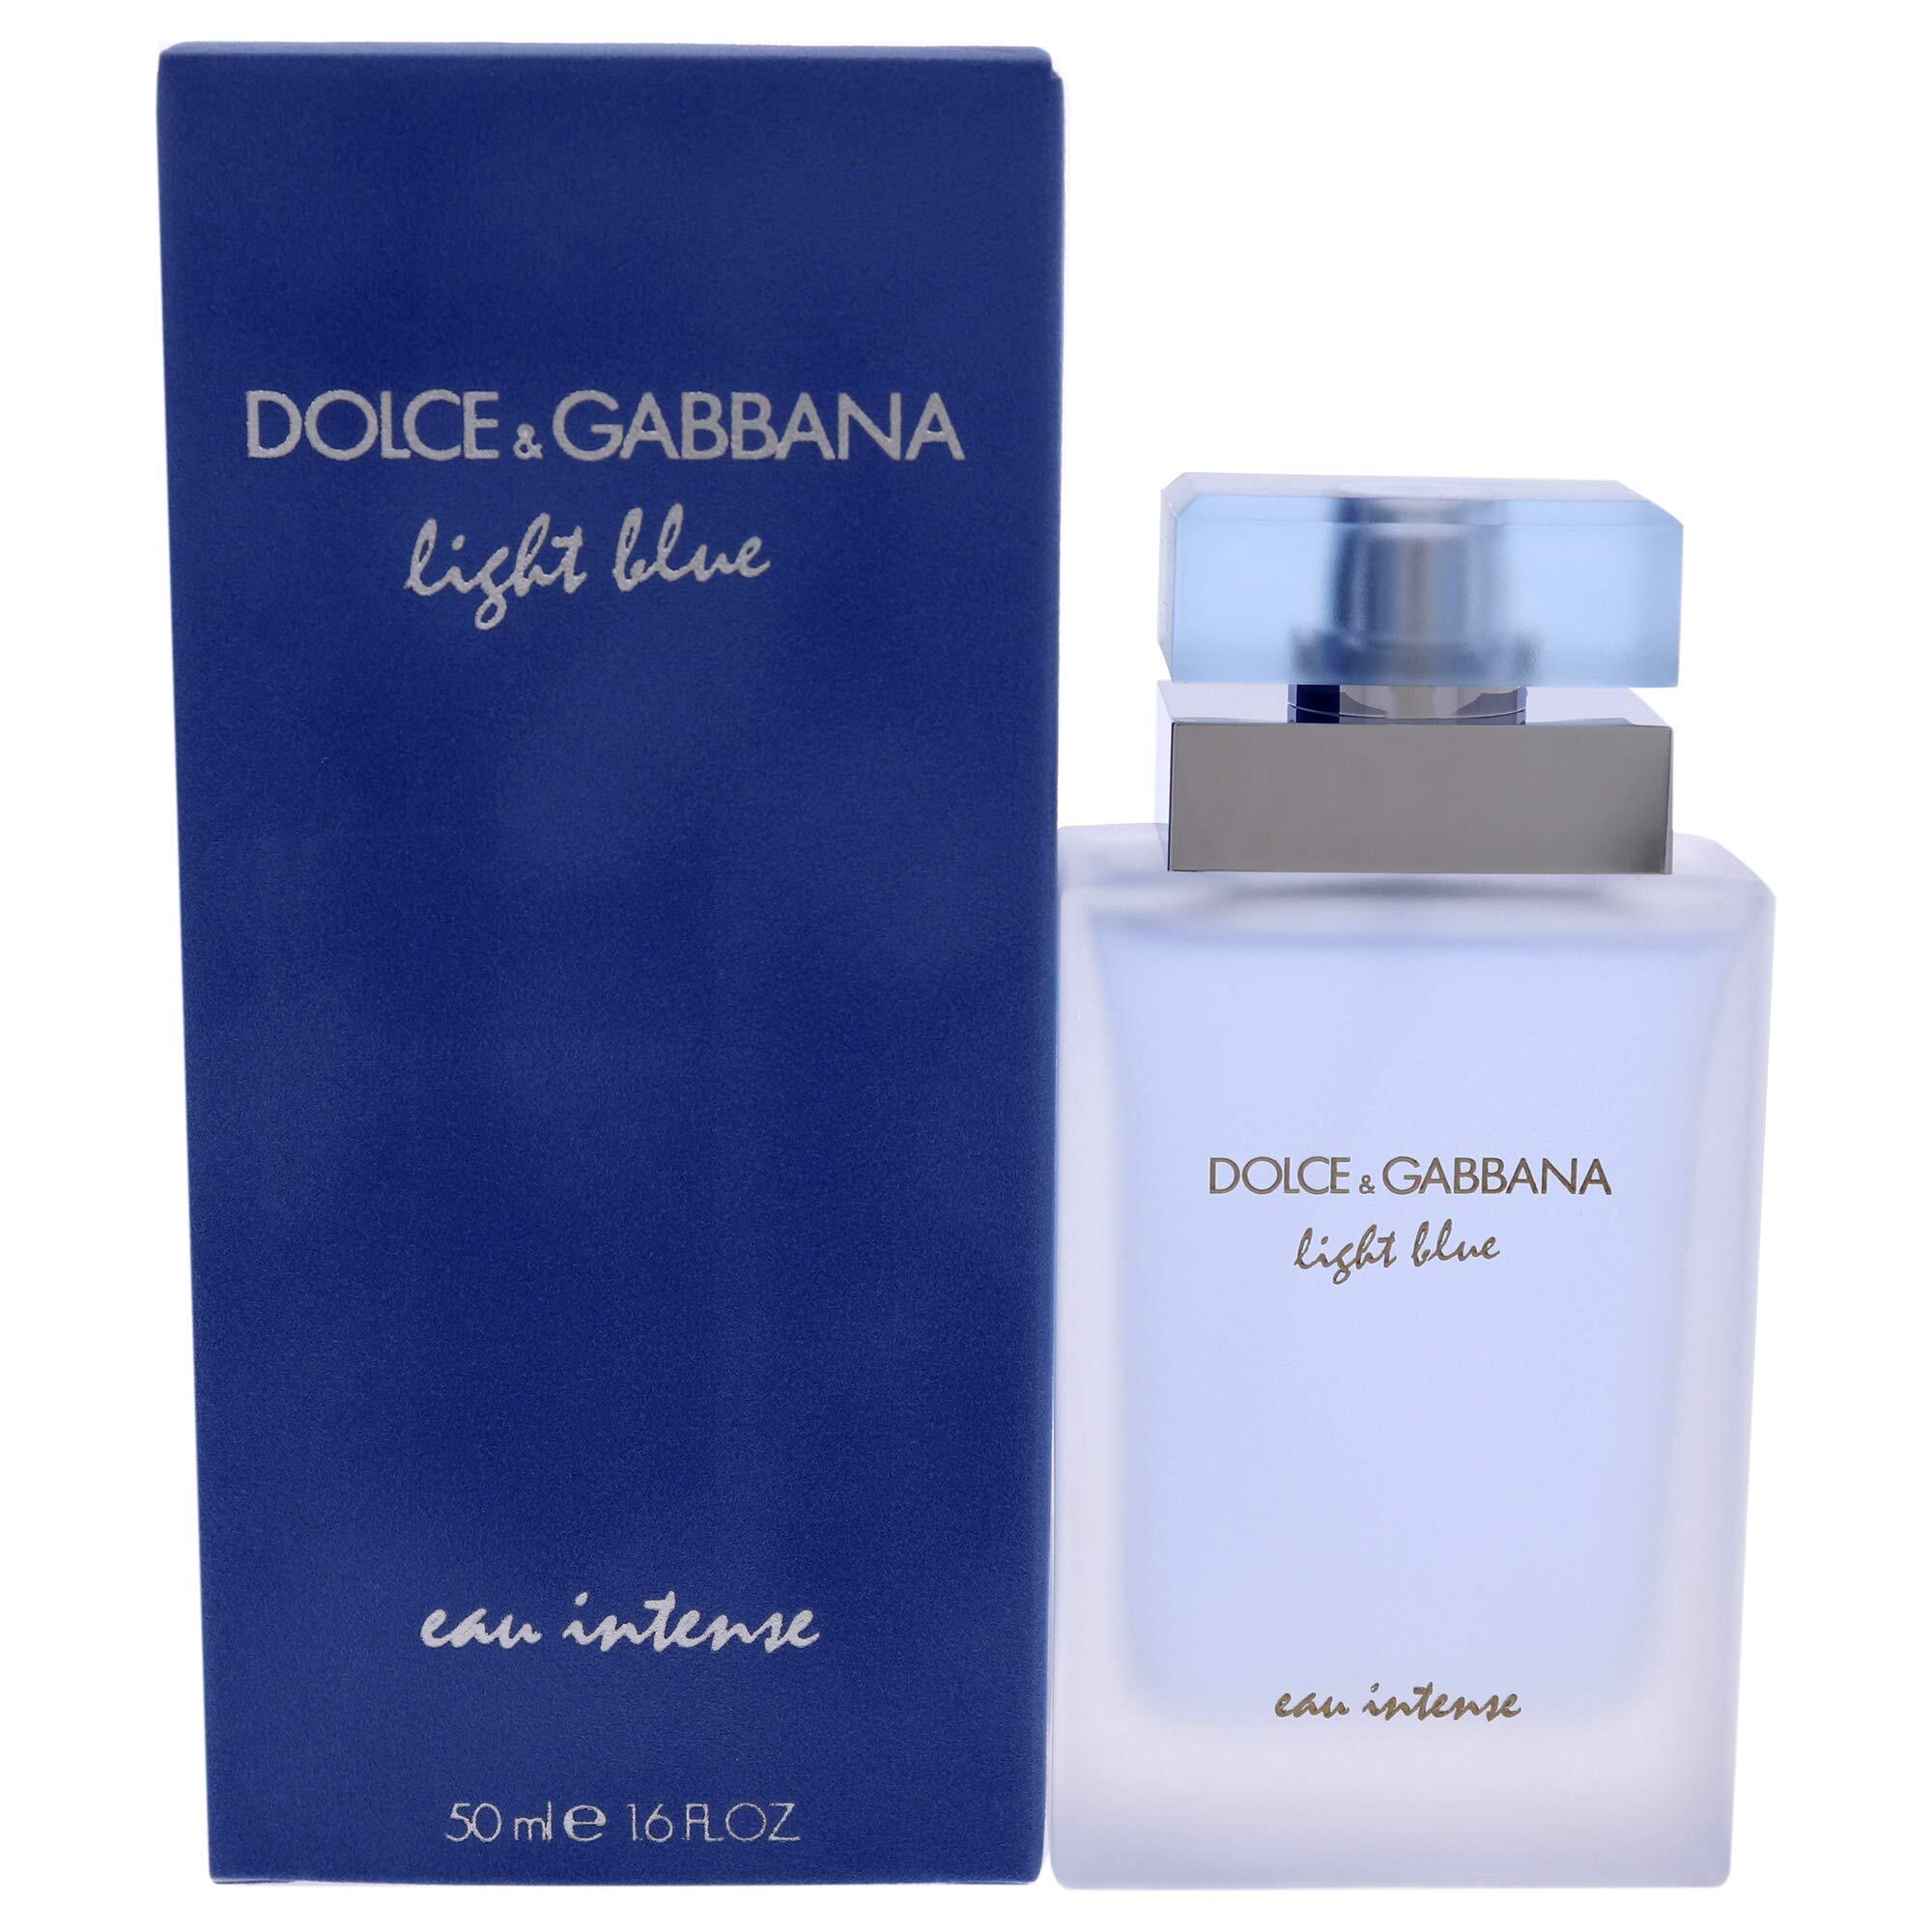 Light blue intense pour homme. Dolce & Gabbana Light Blue 50 мл. Дольче Габбана Лайт Блю Eau intense. Dolce Gabbana Light Blue женские 50 мл. Dolce&Gabbana Light Blue Eau intense, 100 ml.